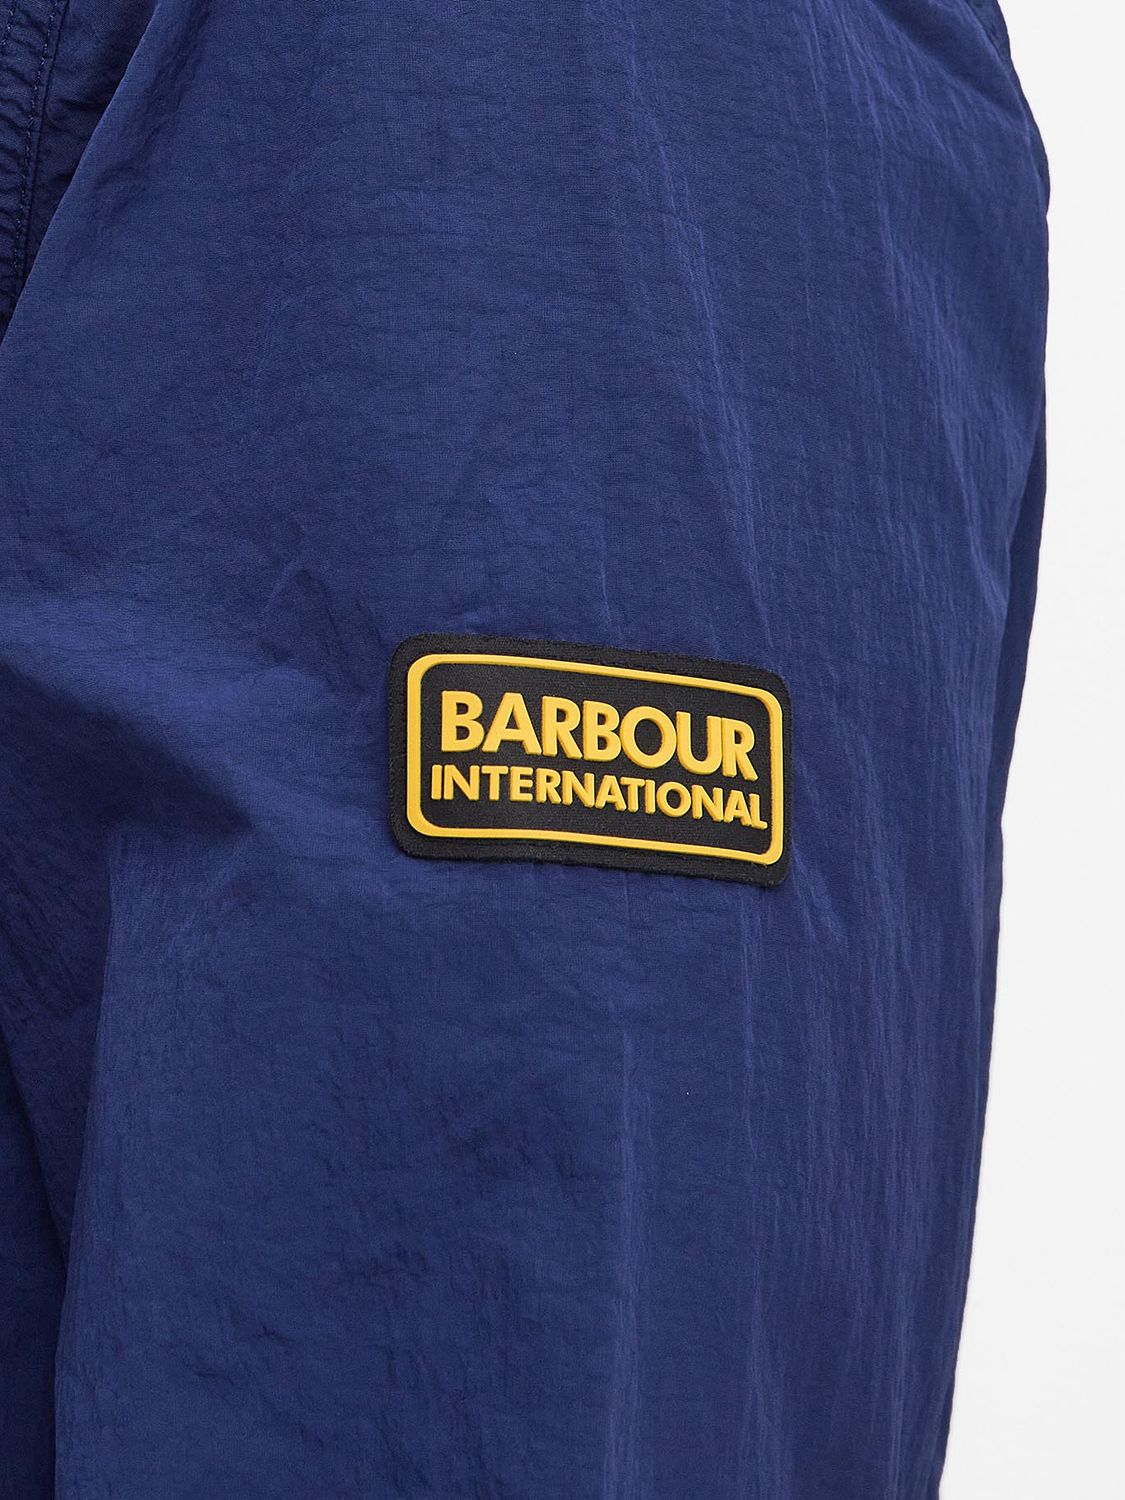 Barbour International Inlet Overshirt, Pigment Navy, S